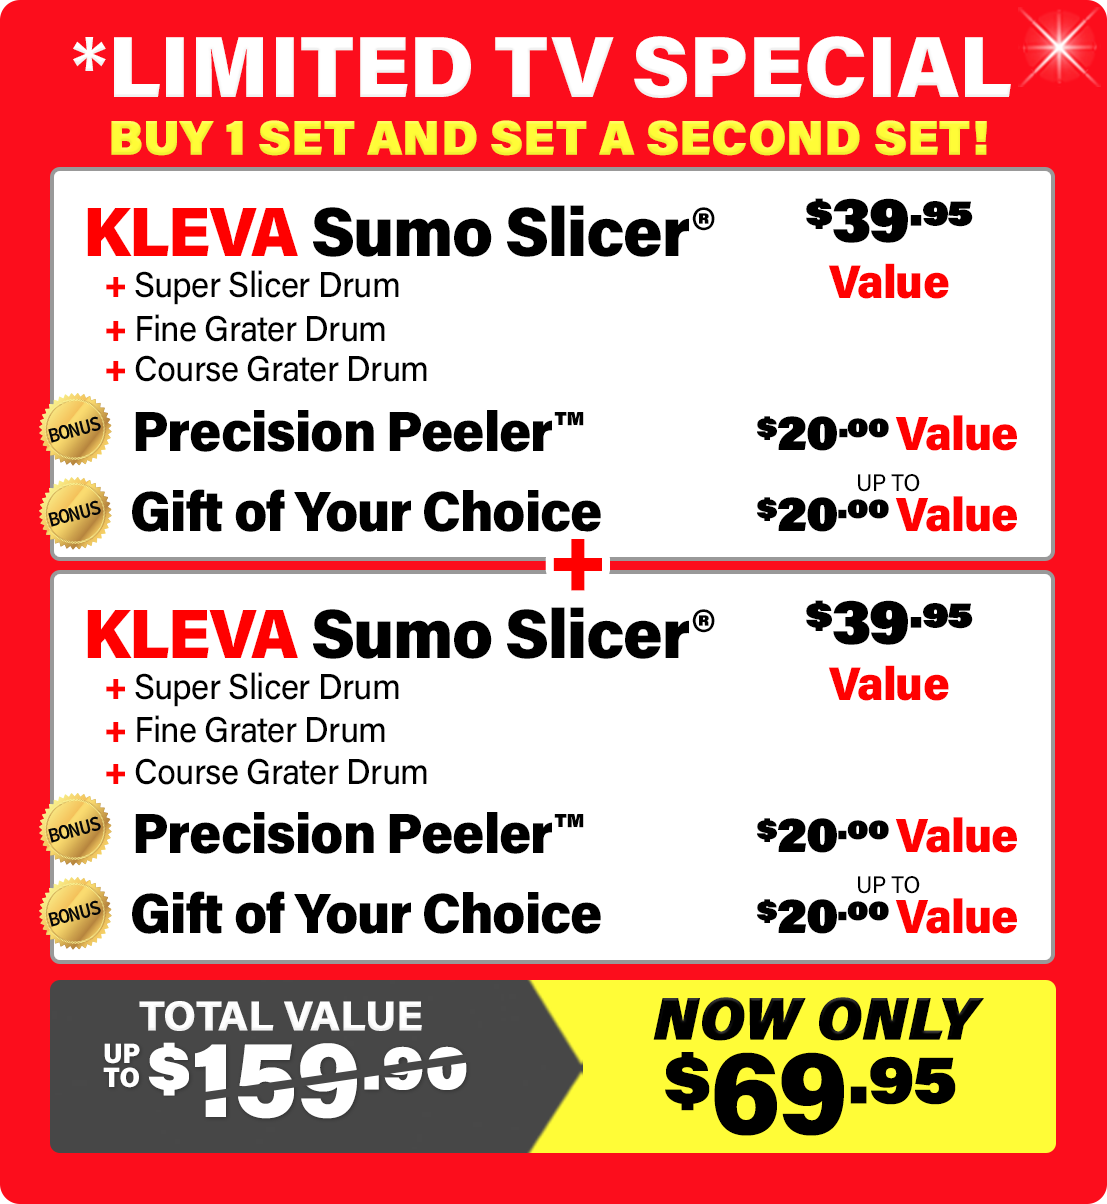 High Street TV: Introducing Sumo Slicer!